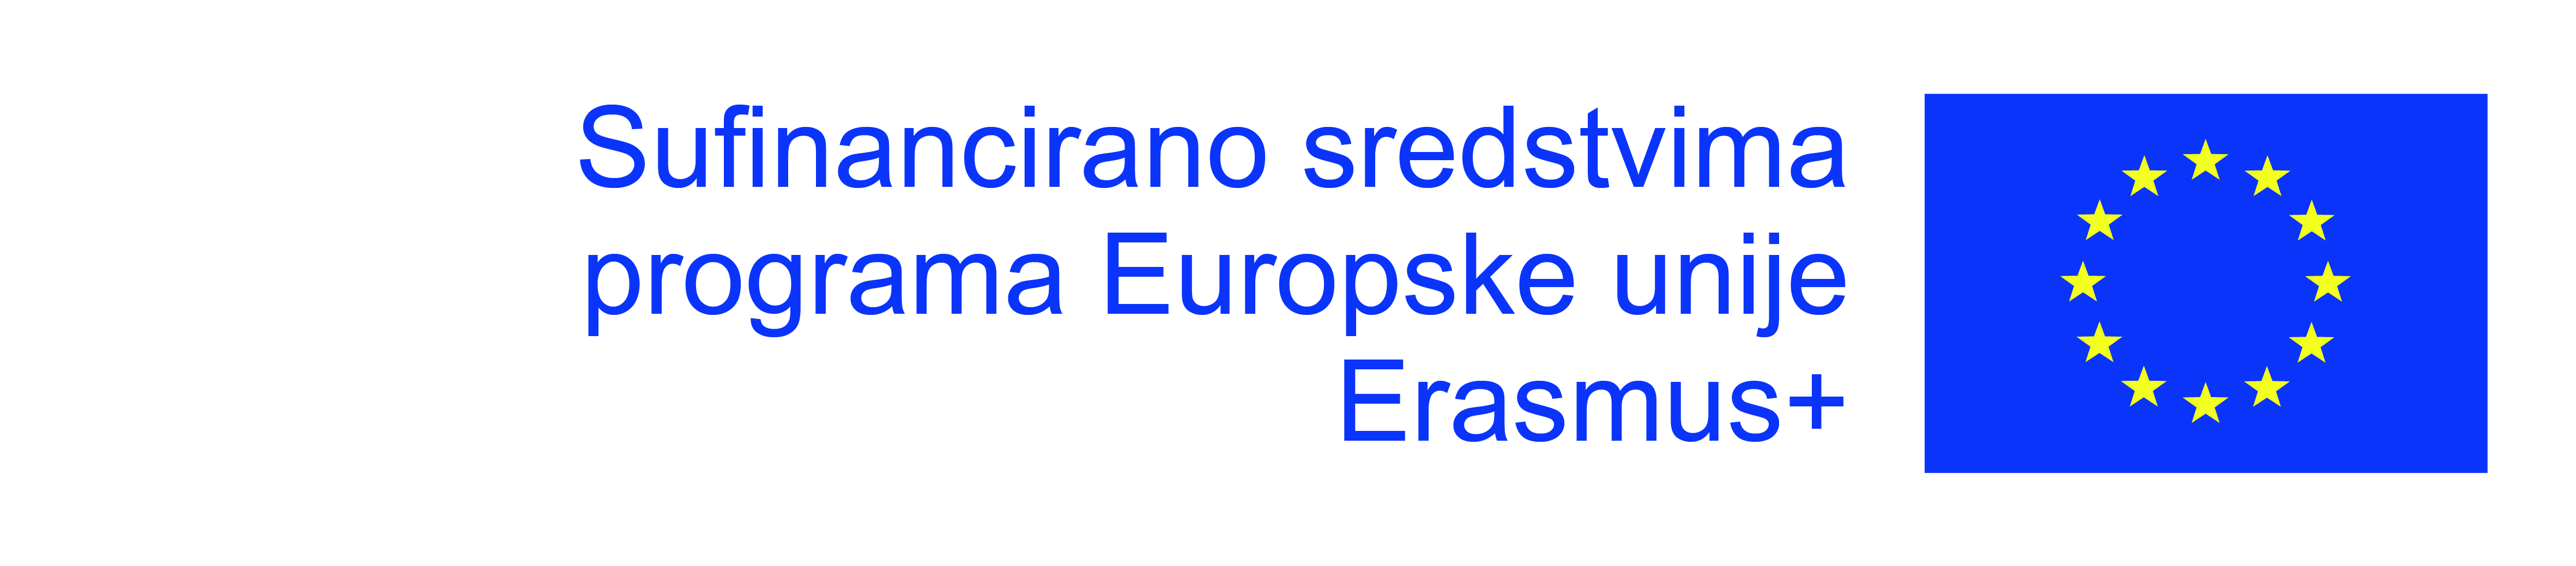 Sufinancirano sredstvima programa Europske unije Erasmus+ (tekst desno)